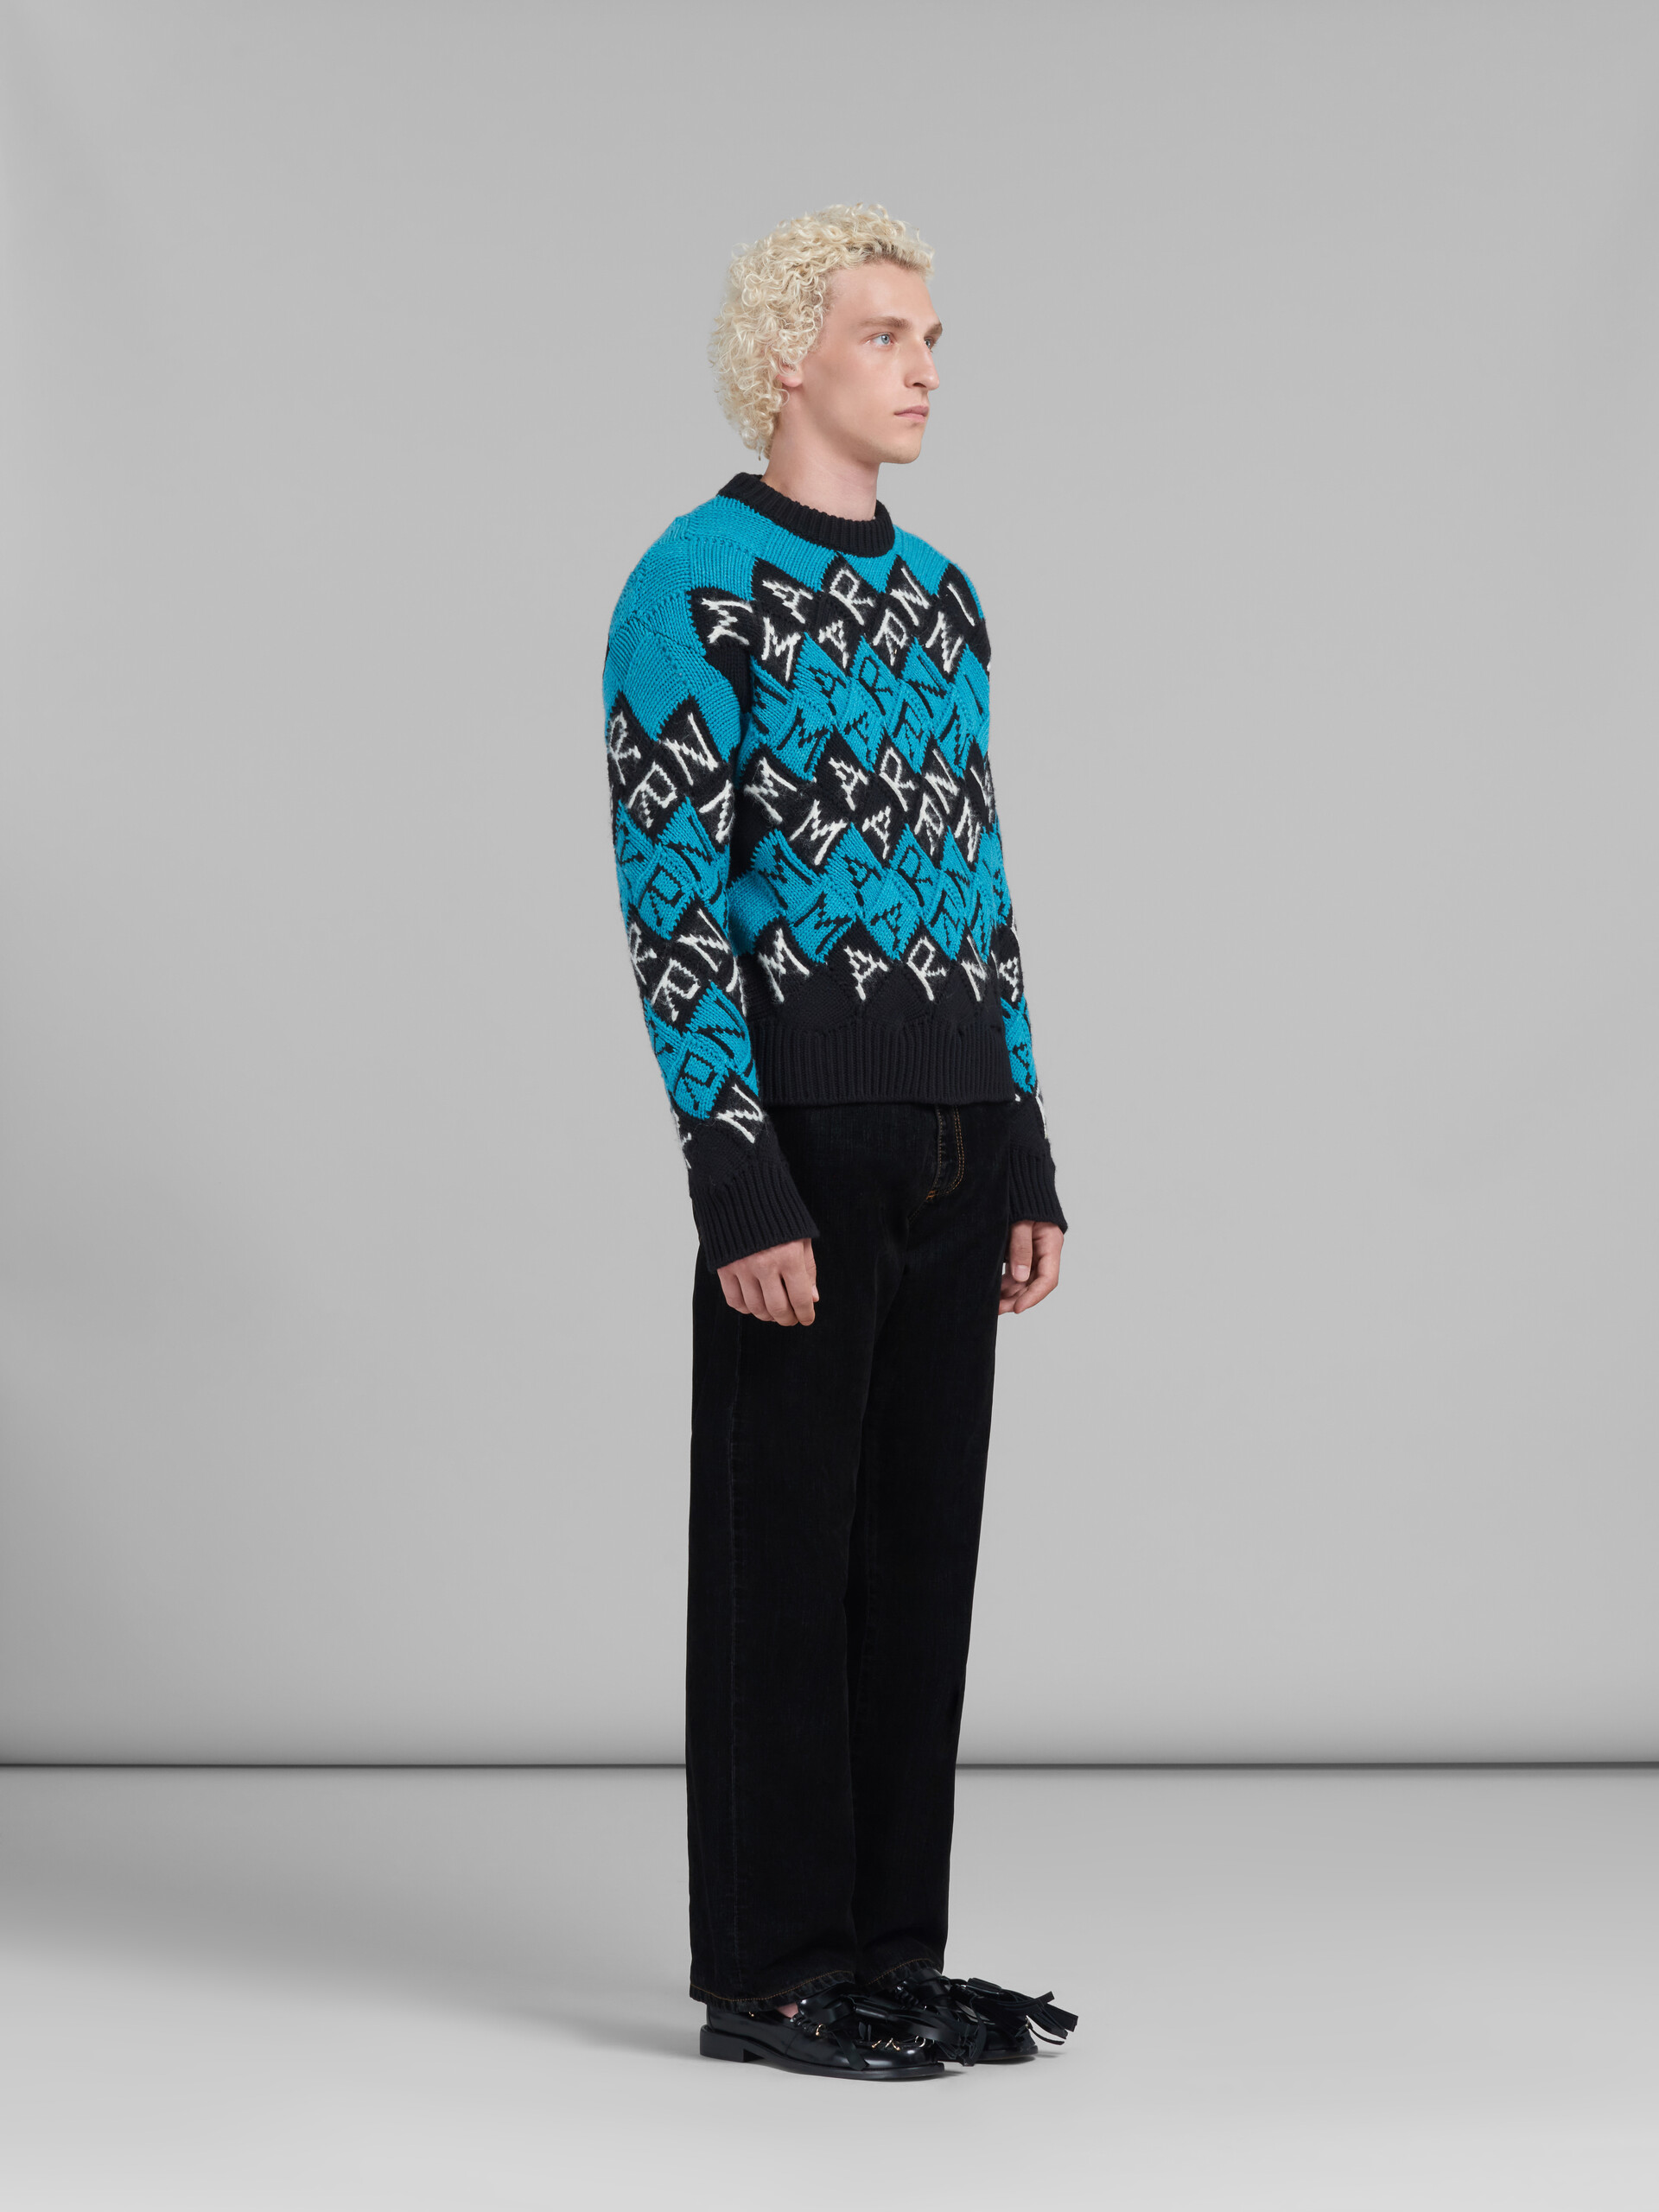 Blue and black wool Marni block jumper - Pullovers - Image 5